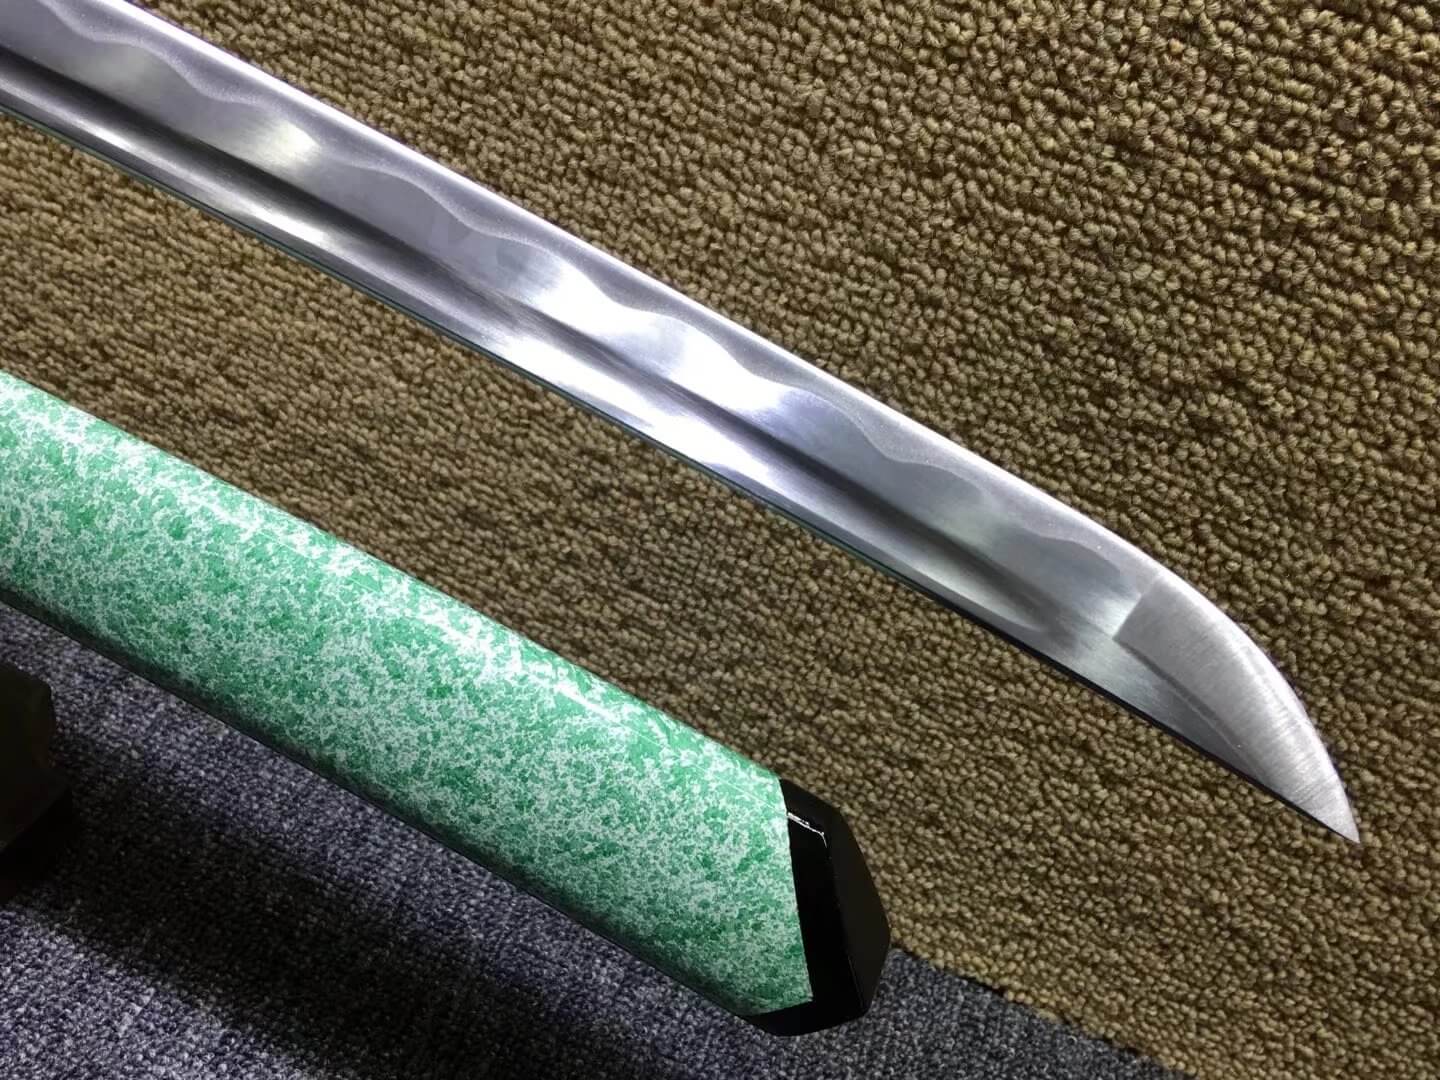 Katana,Medium carbon steel bade,Light green scabbard - Chinese sword shop